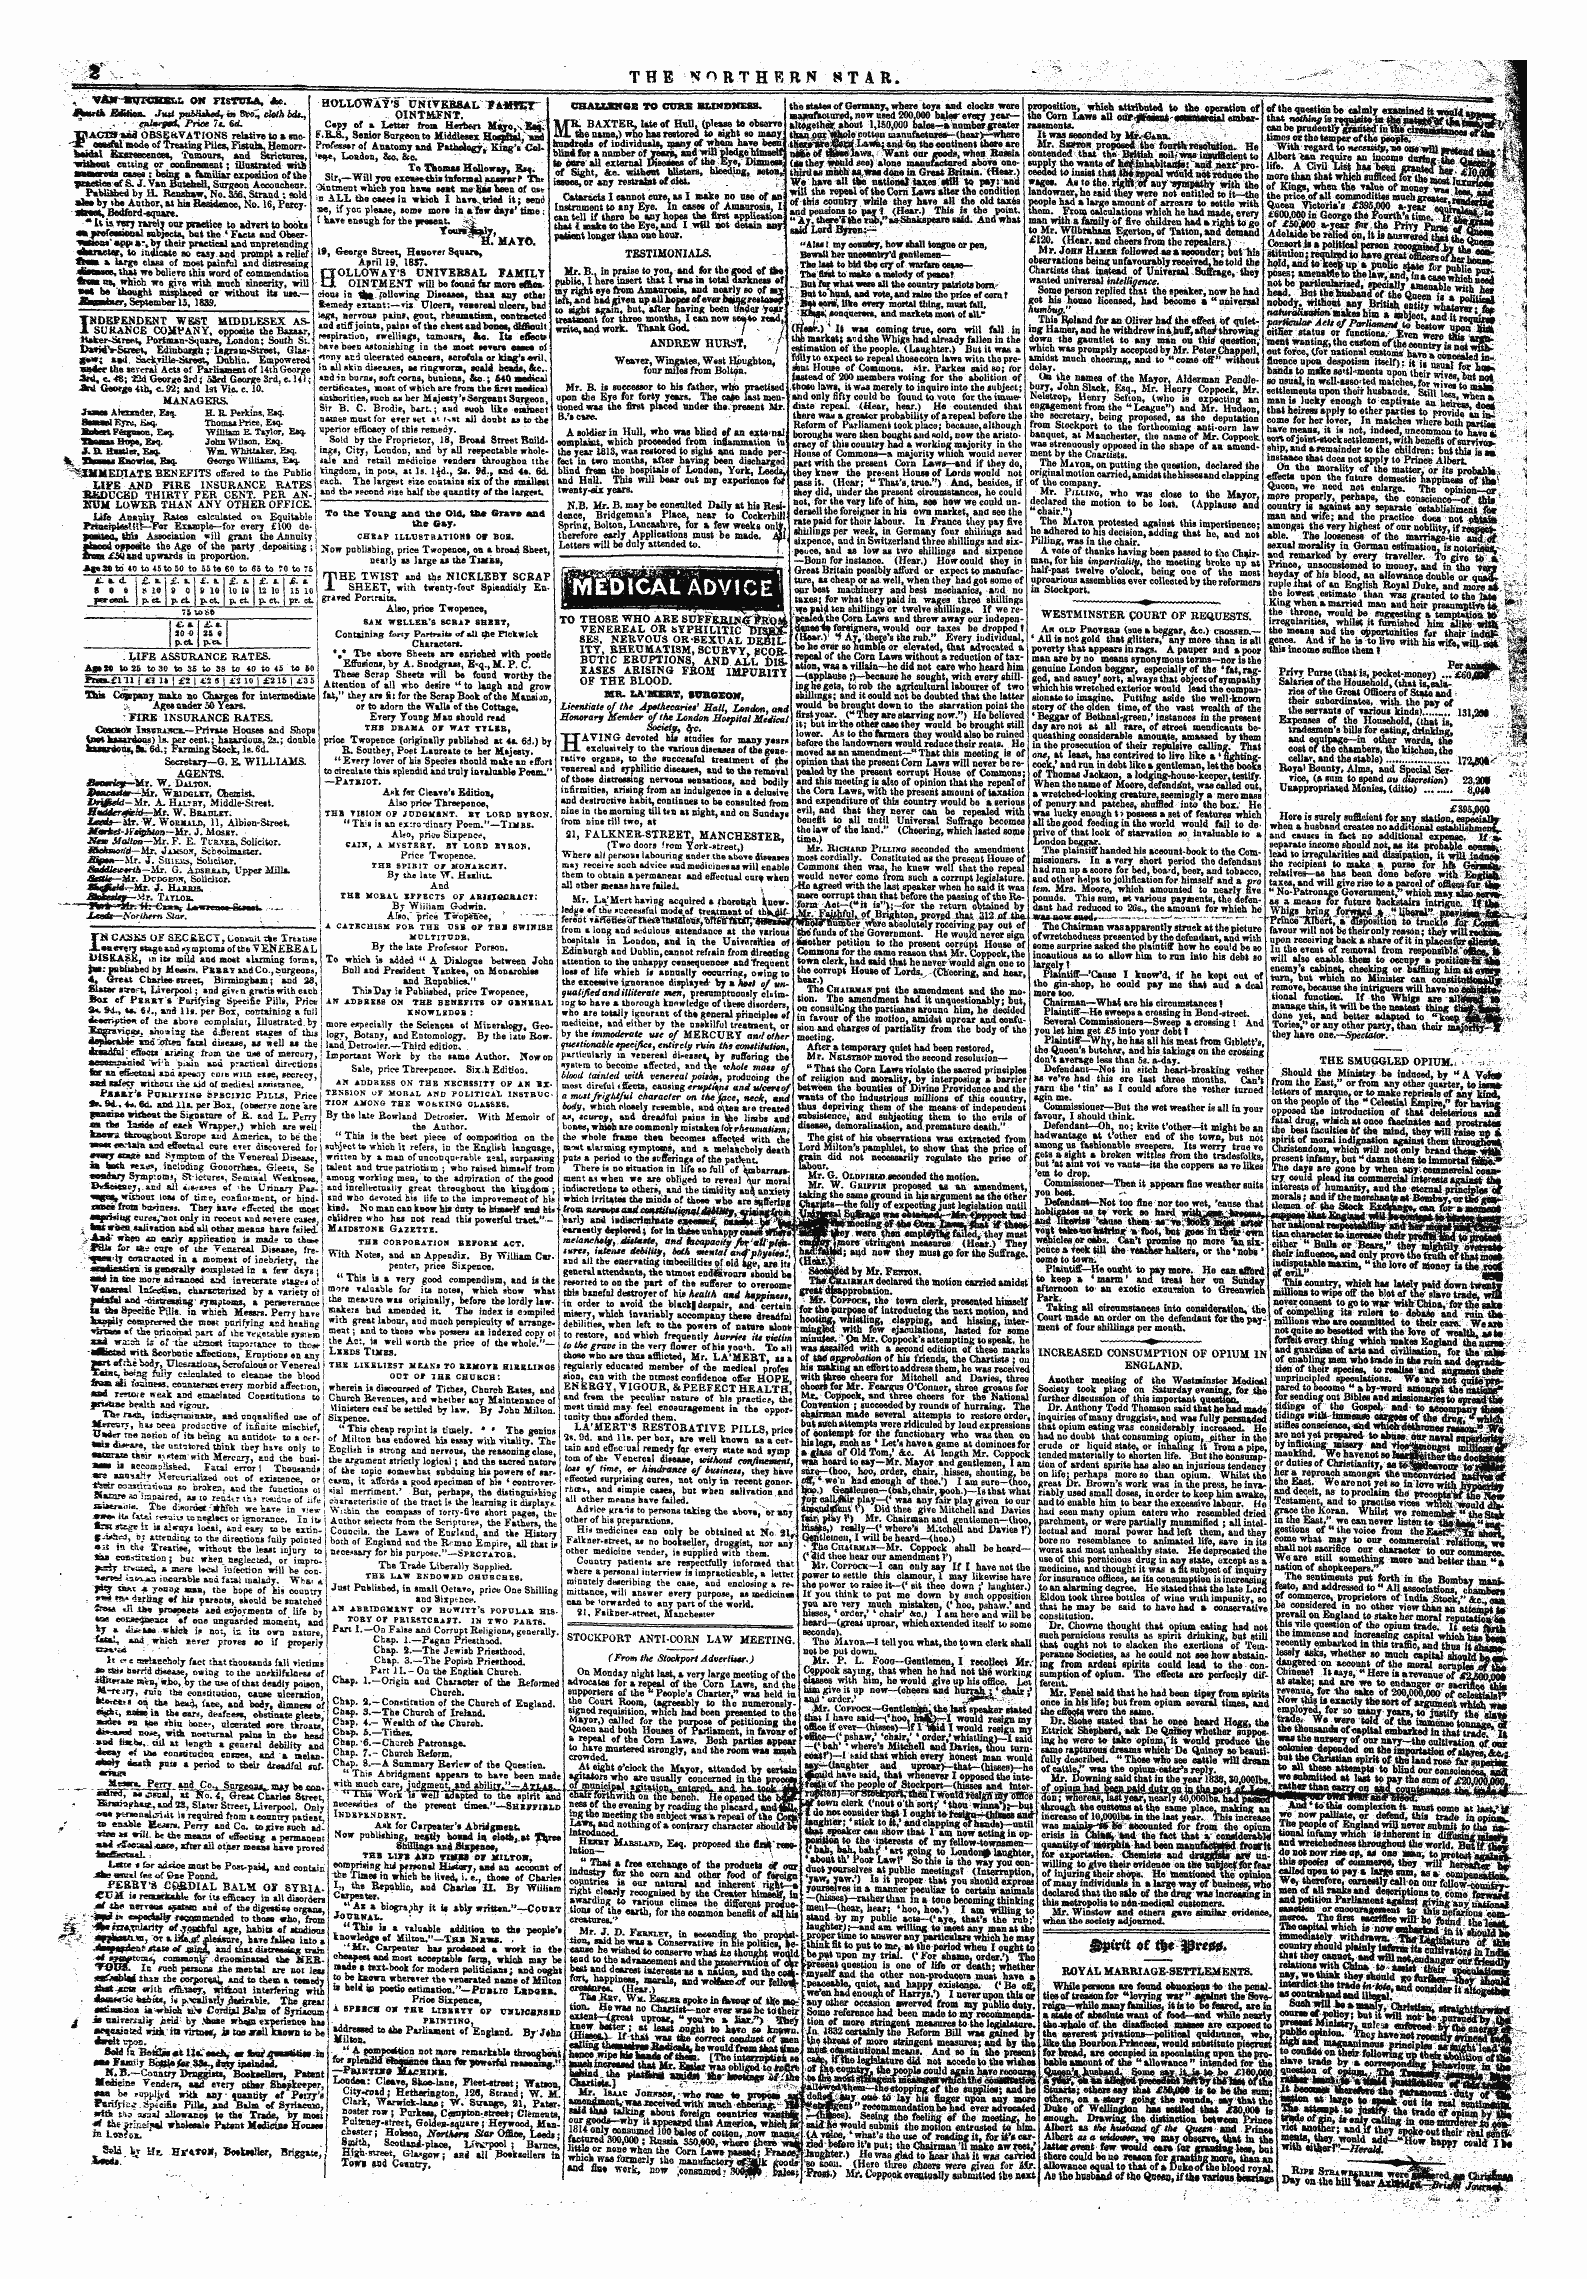 Northern Star (1837-1852): jS F Y, 1st edition - Stockport Anti-Corn Law Meeting.